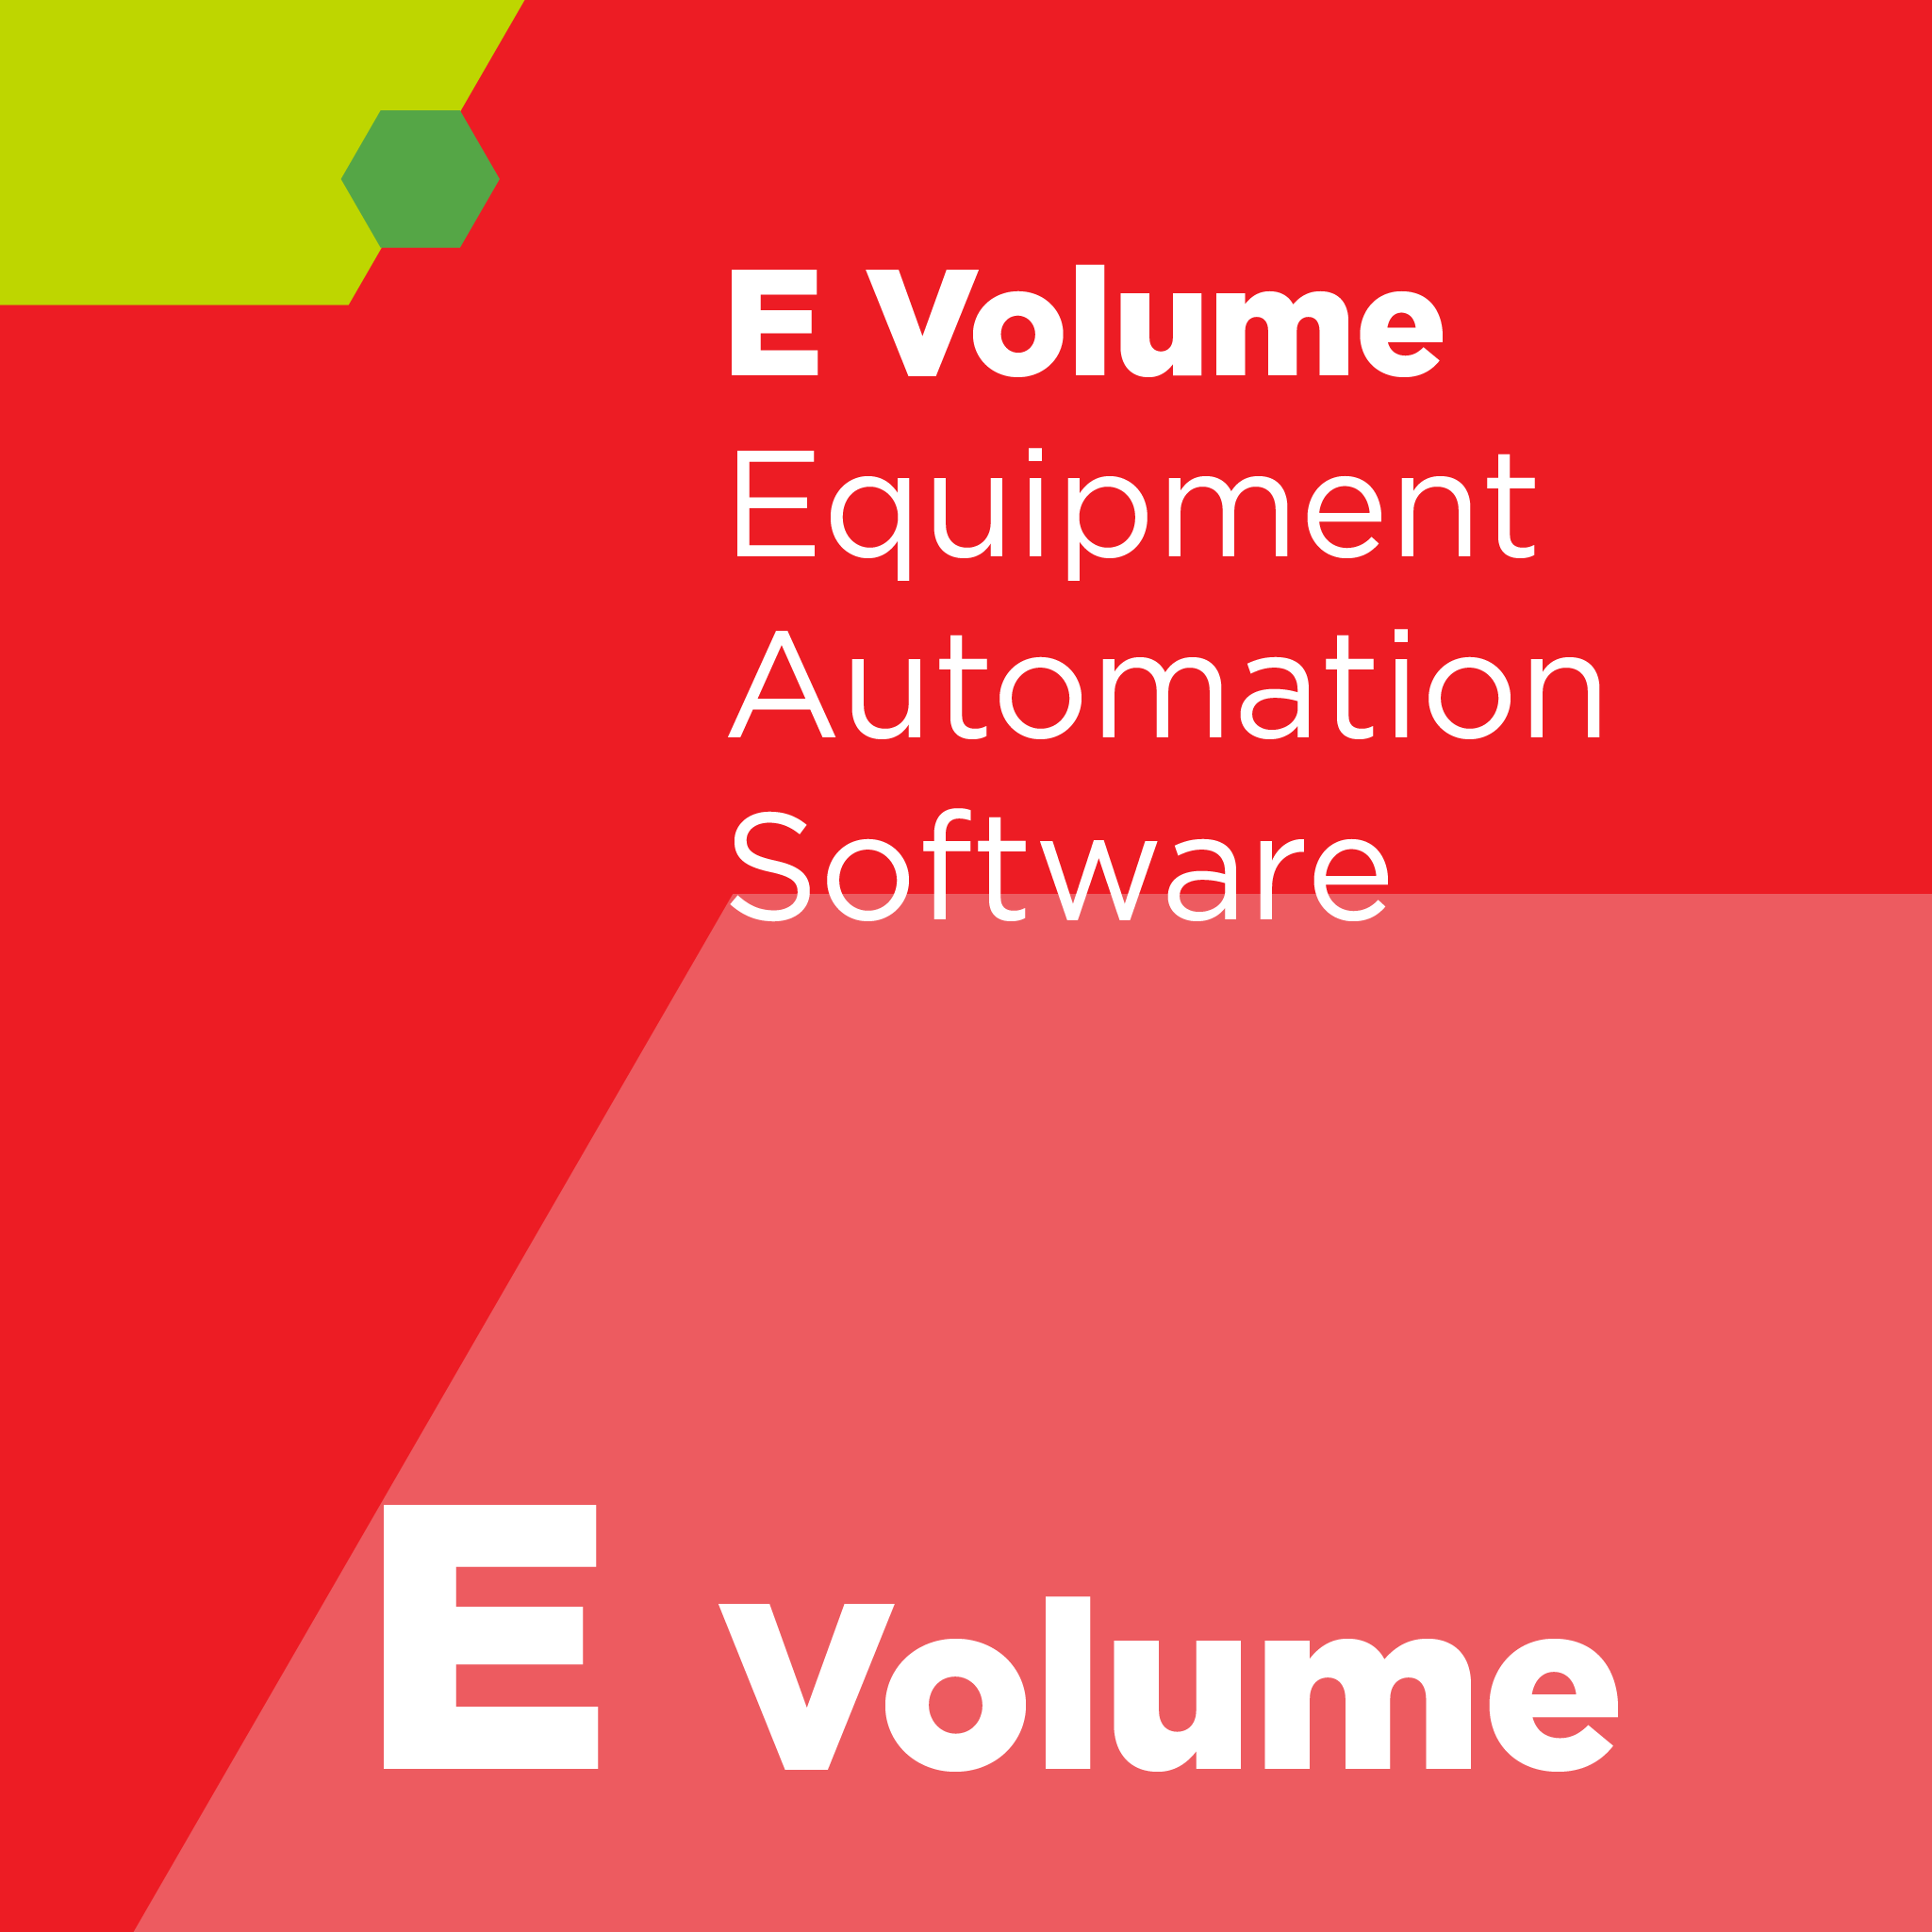 E09800 - SEMI E98 - Provisional Standard for the Object-Based Equipment Model (OBEM)